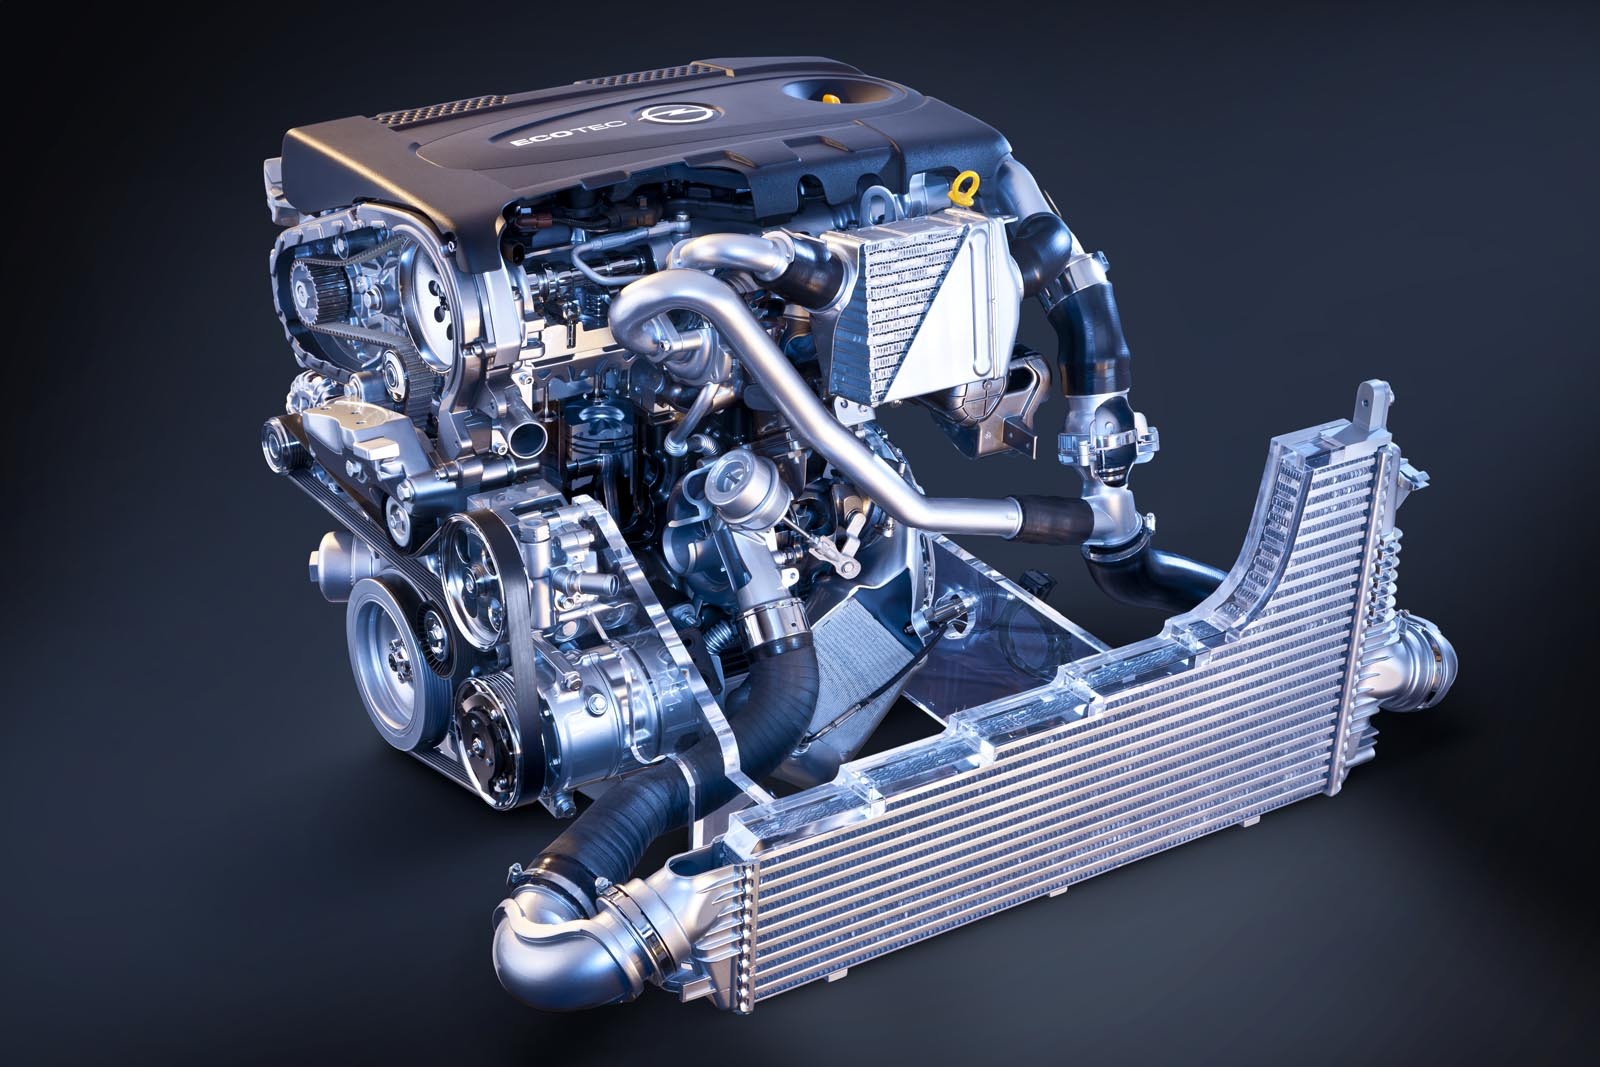 Noul diesel BiTurbo de pe Insignia are 195 CP, 400 Nm, doua turbine si doua intercoolere